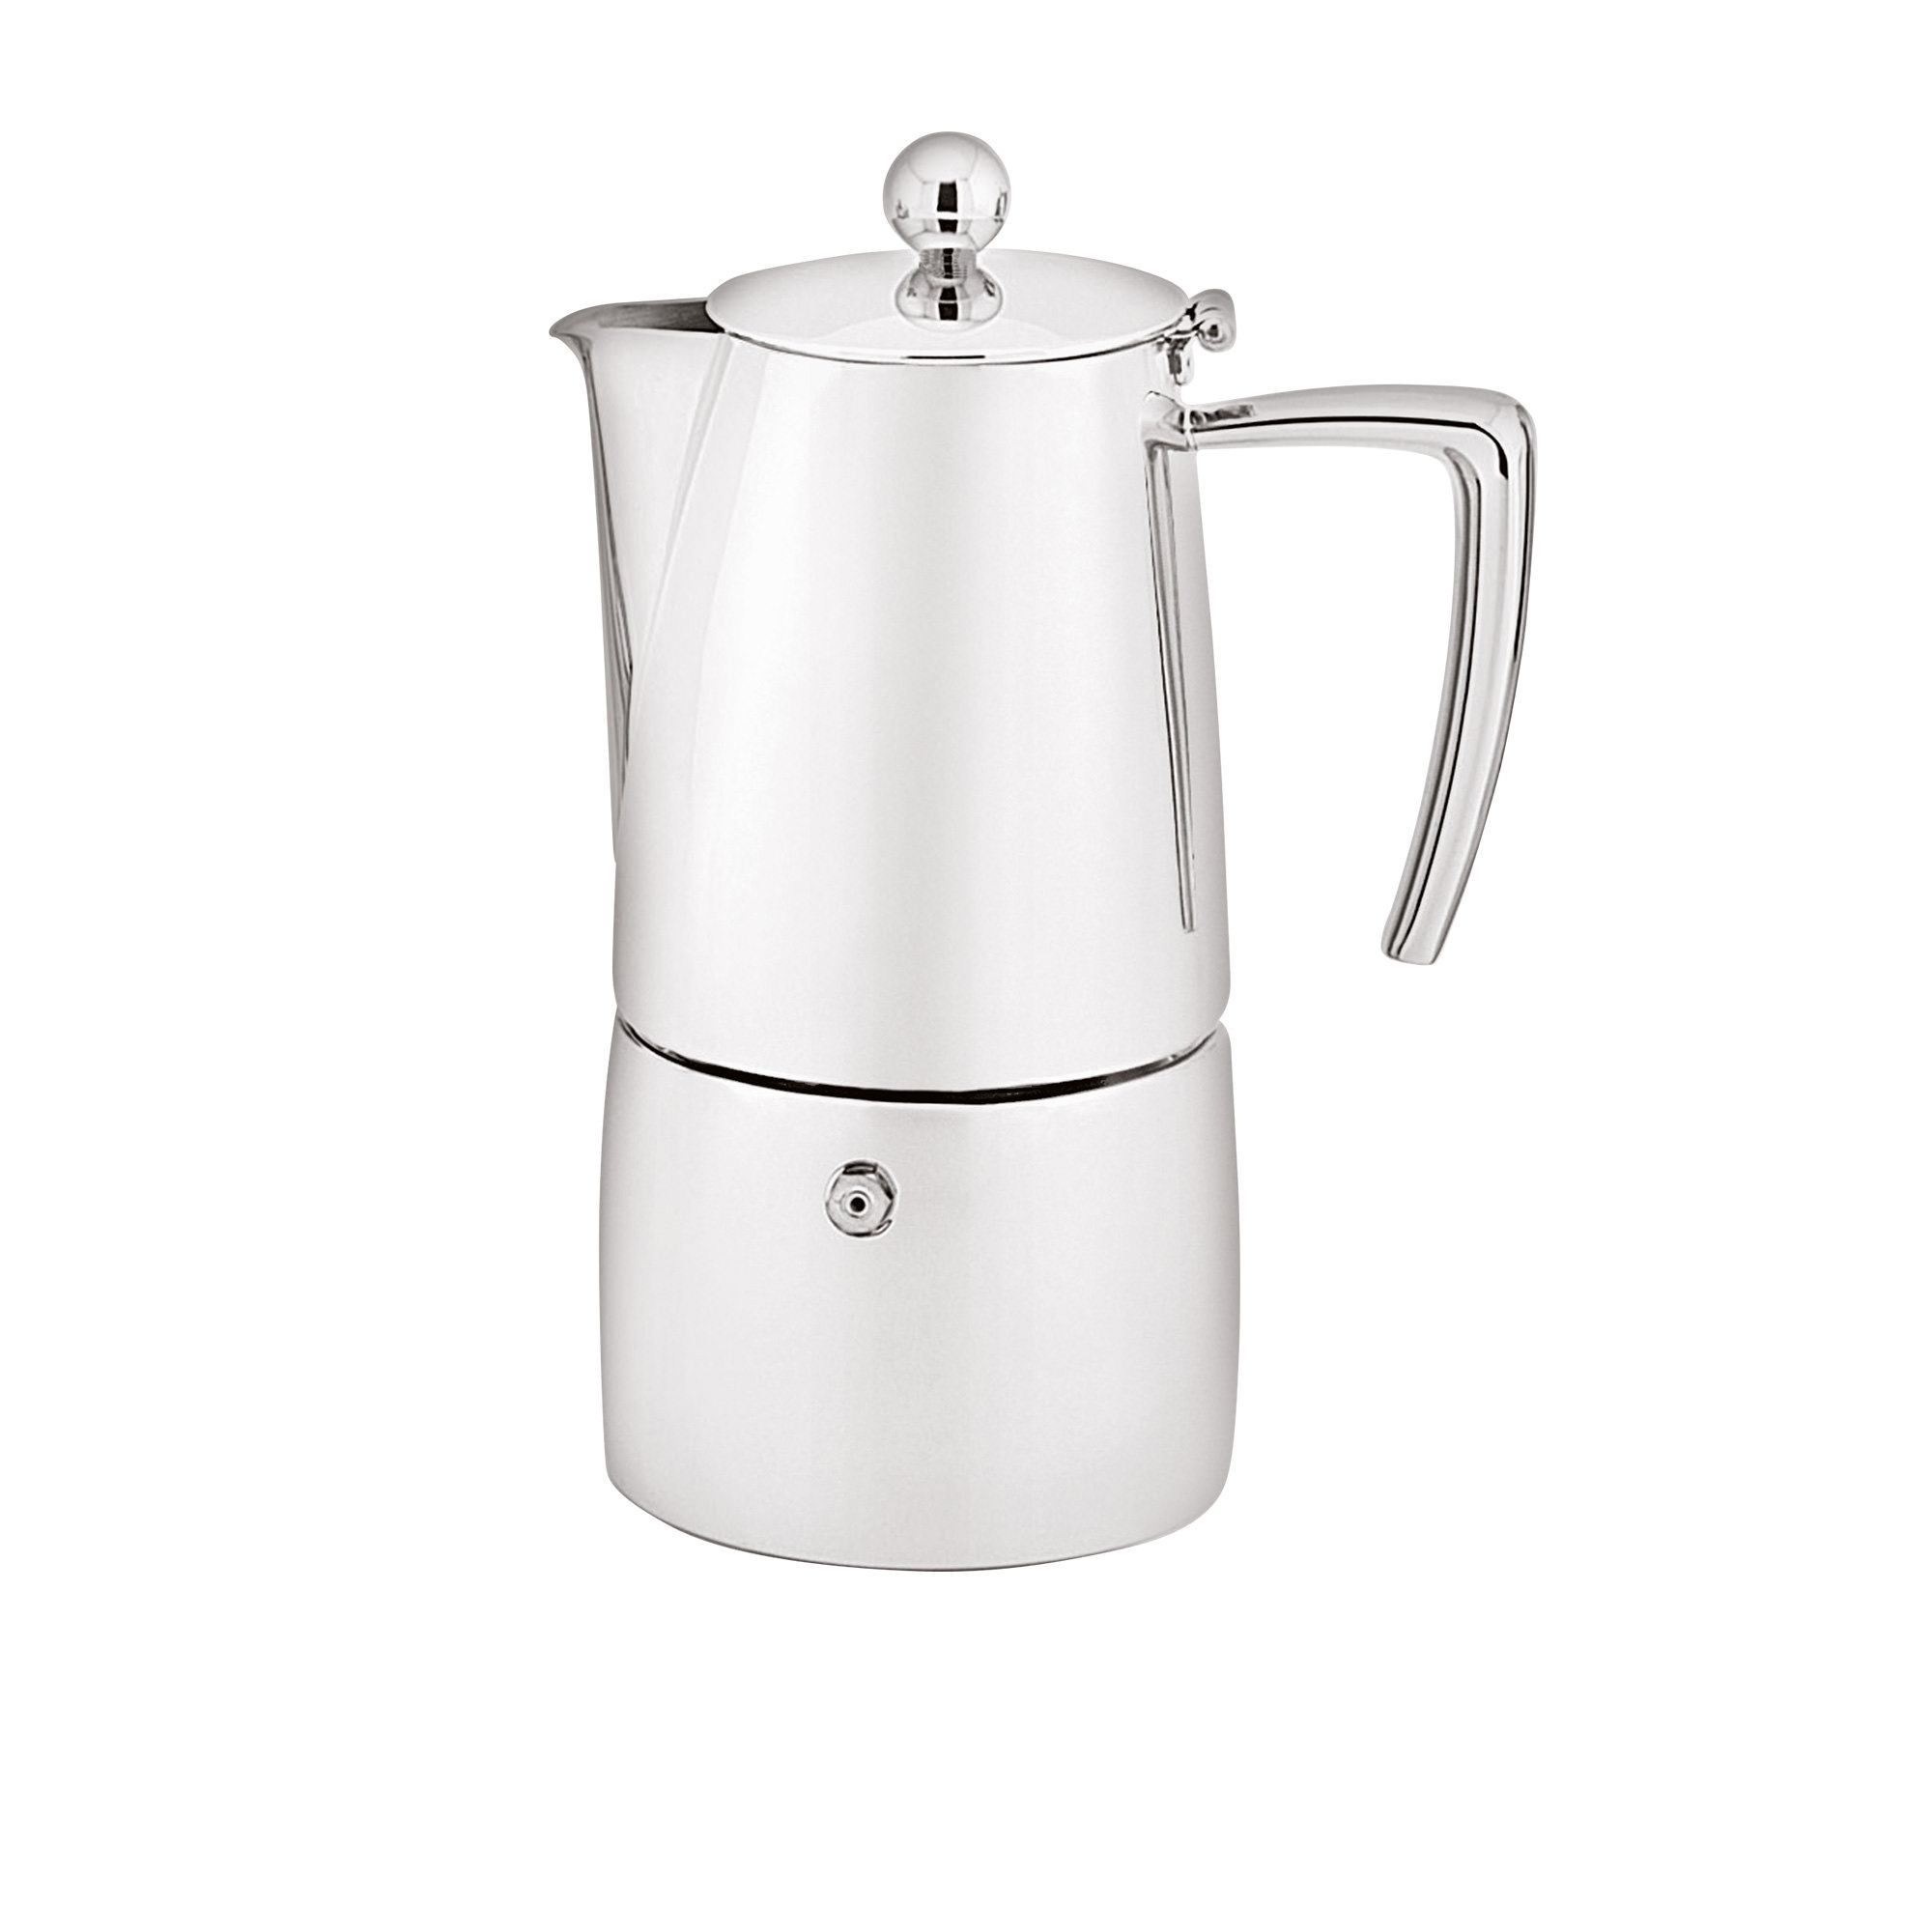 Avanti Art Deco Espresso Maker 6 Cup Image 1